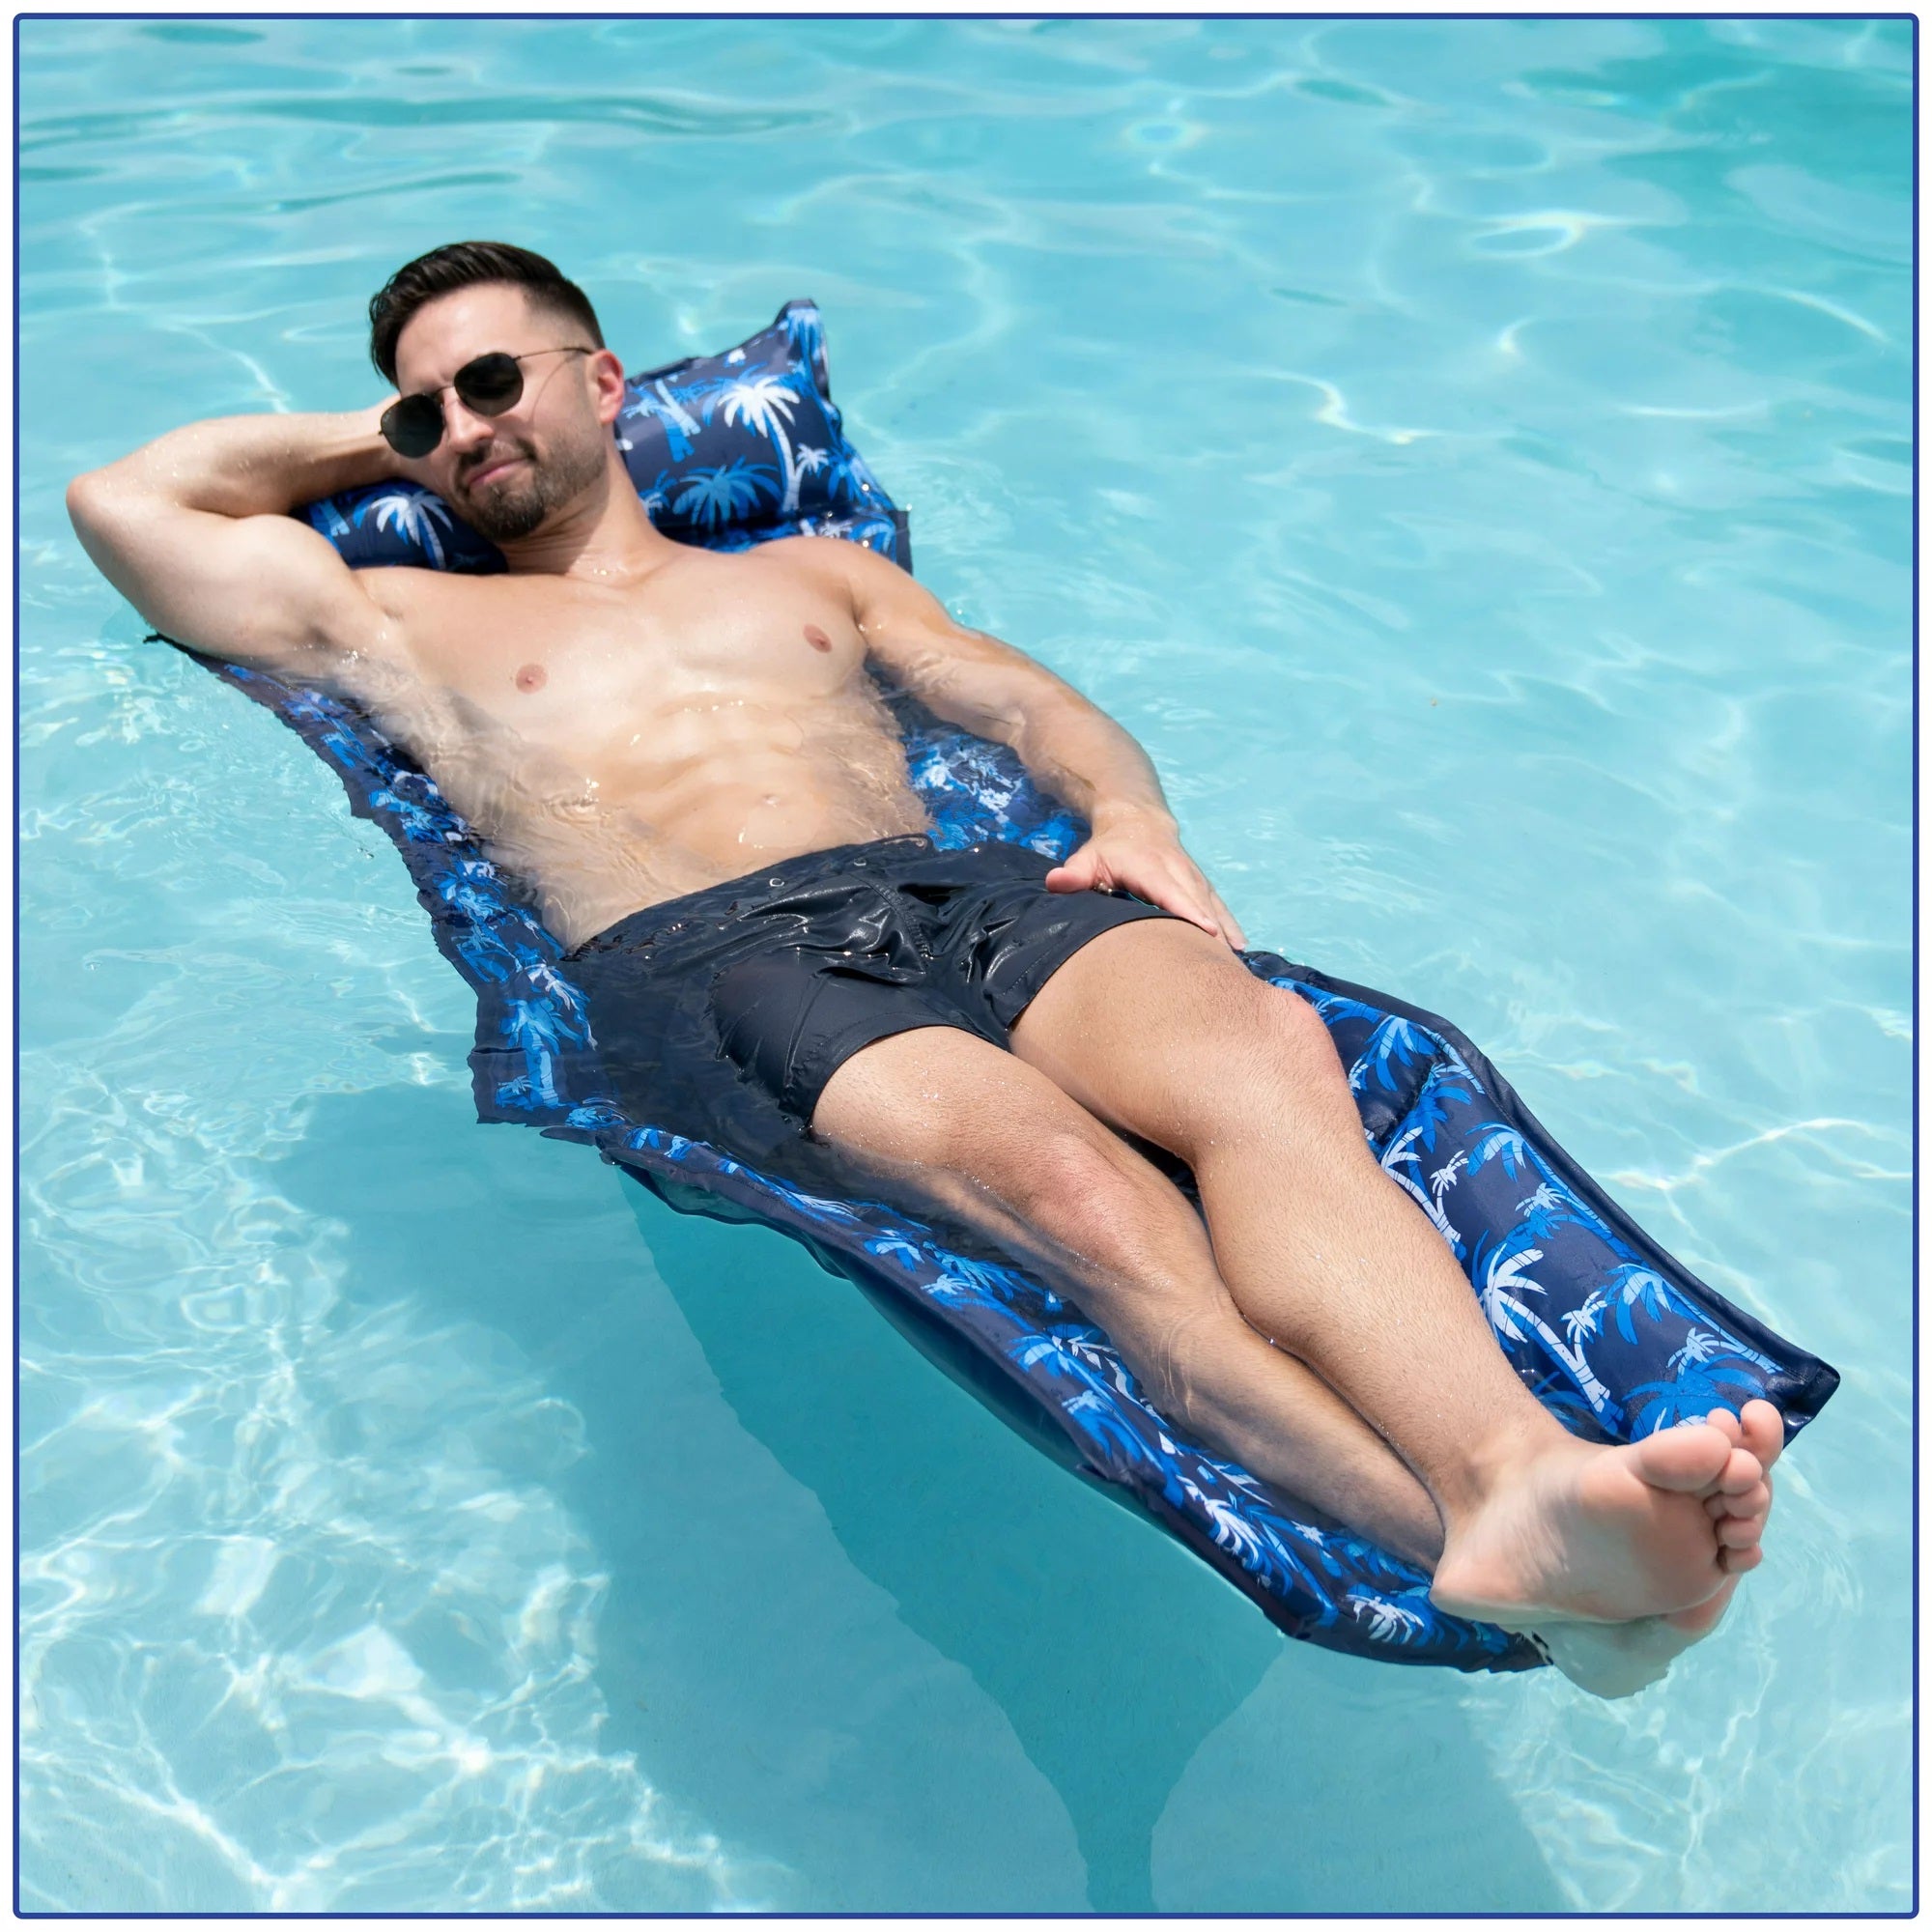 Aqua 3-in-1 Unisex Adult Fold & Go Pool Float